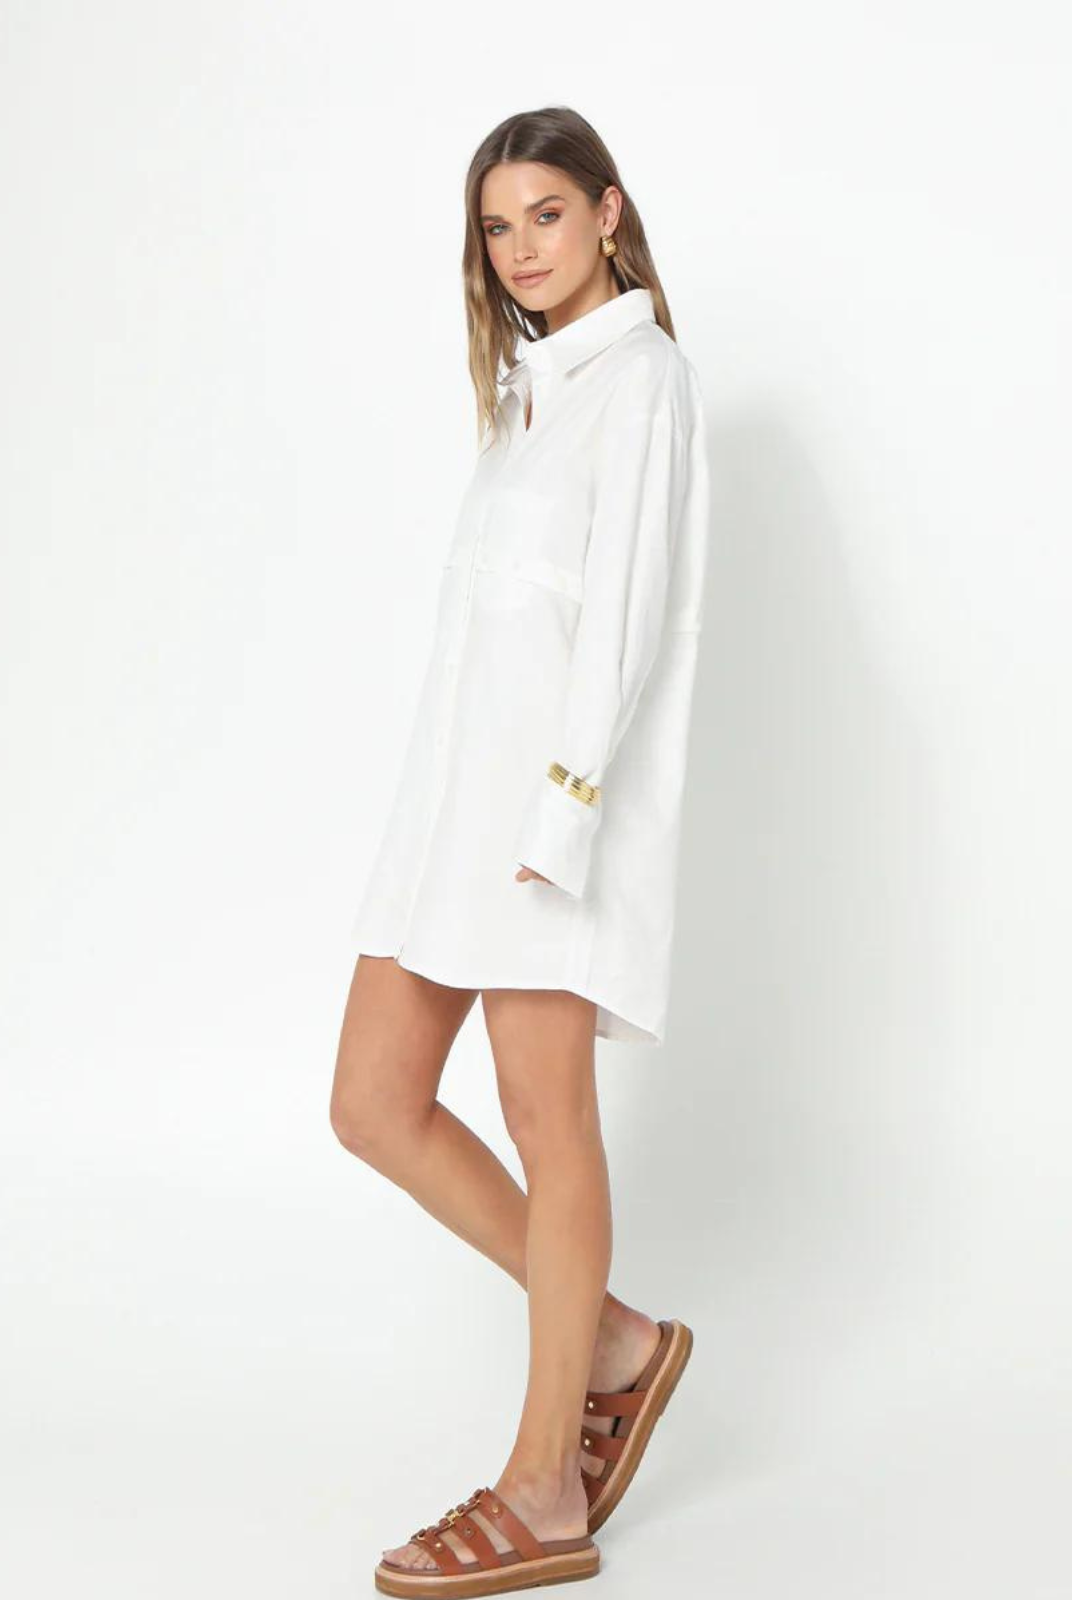 Madison The Label Taya Shirt Dress. White collared shirt dress.